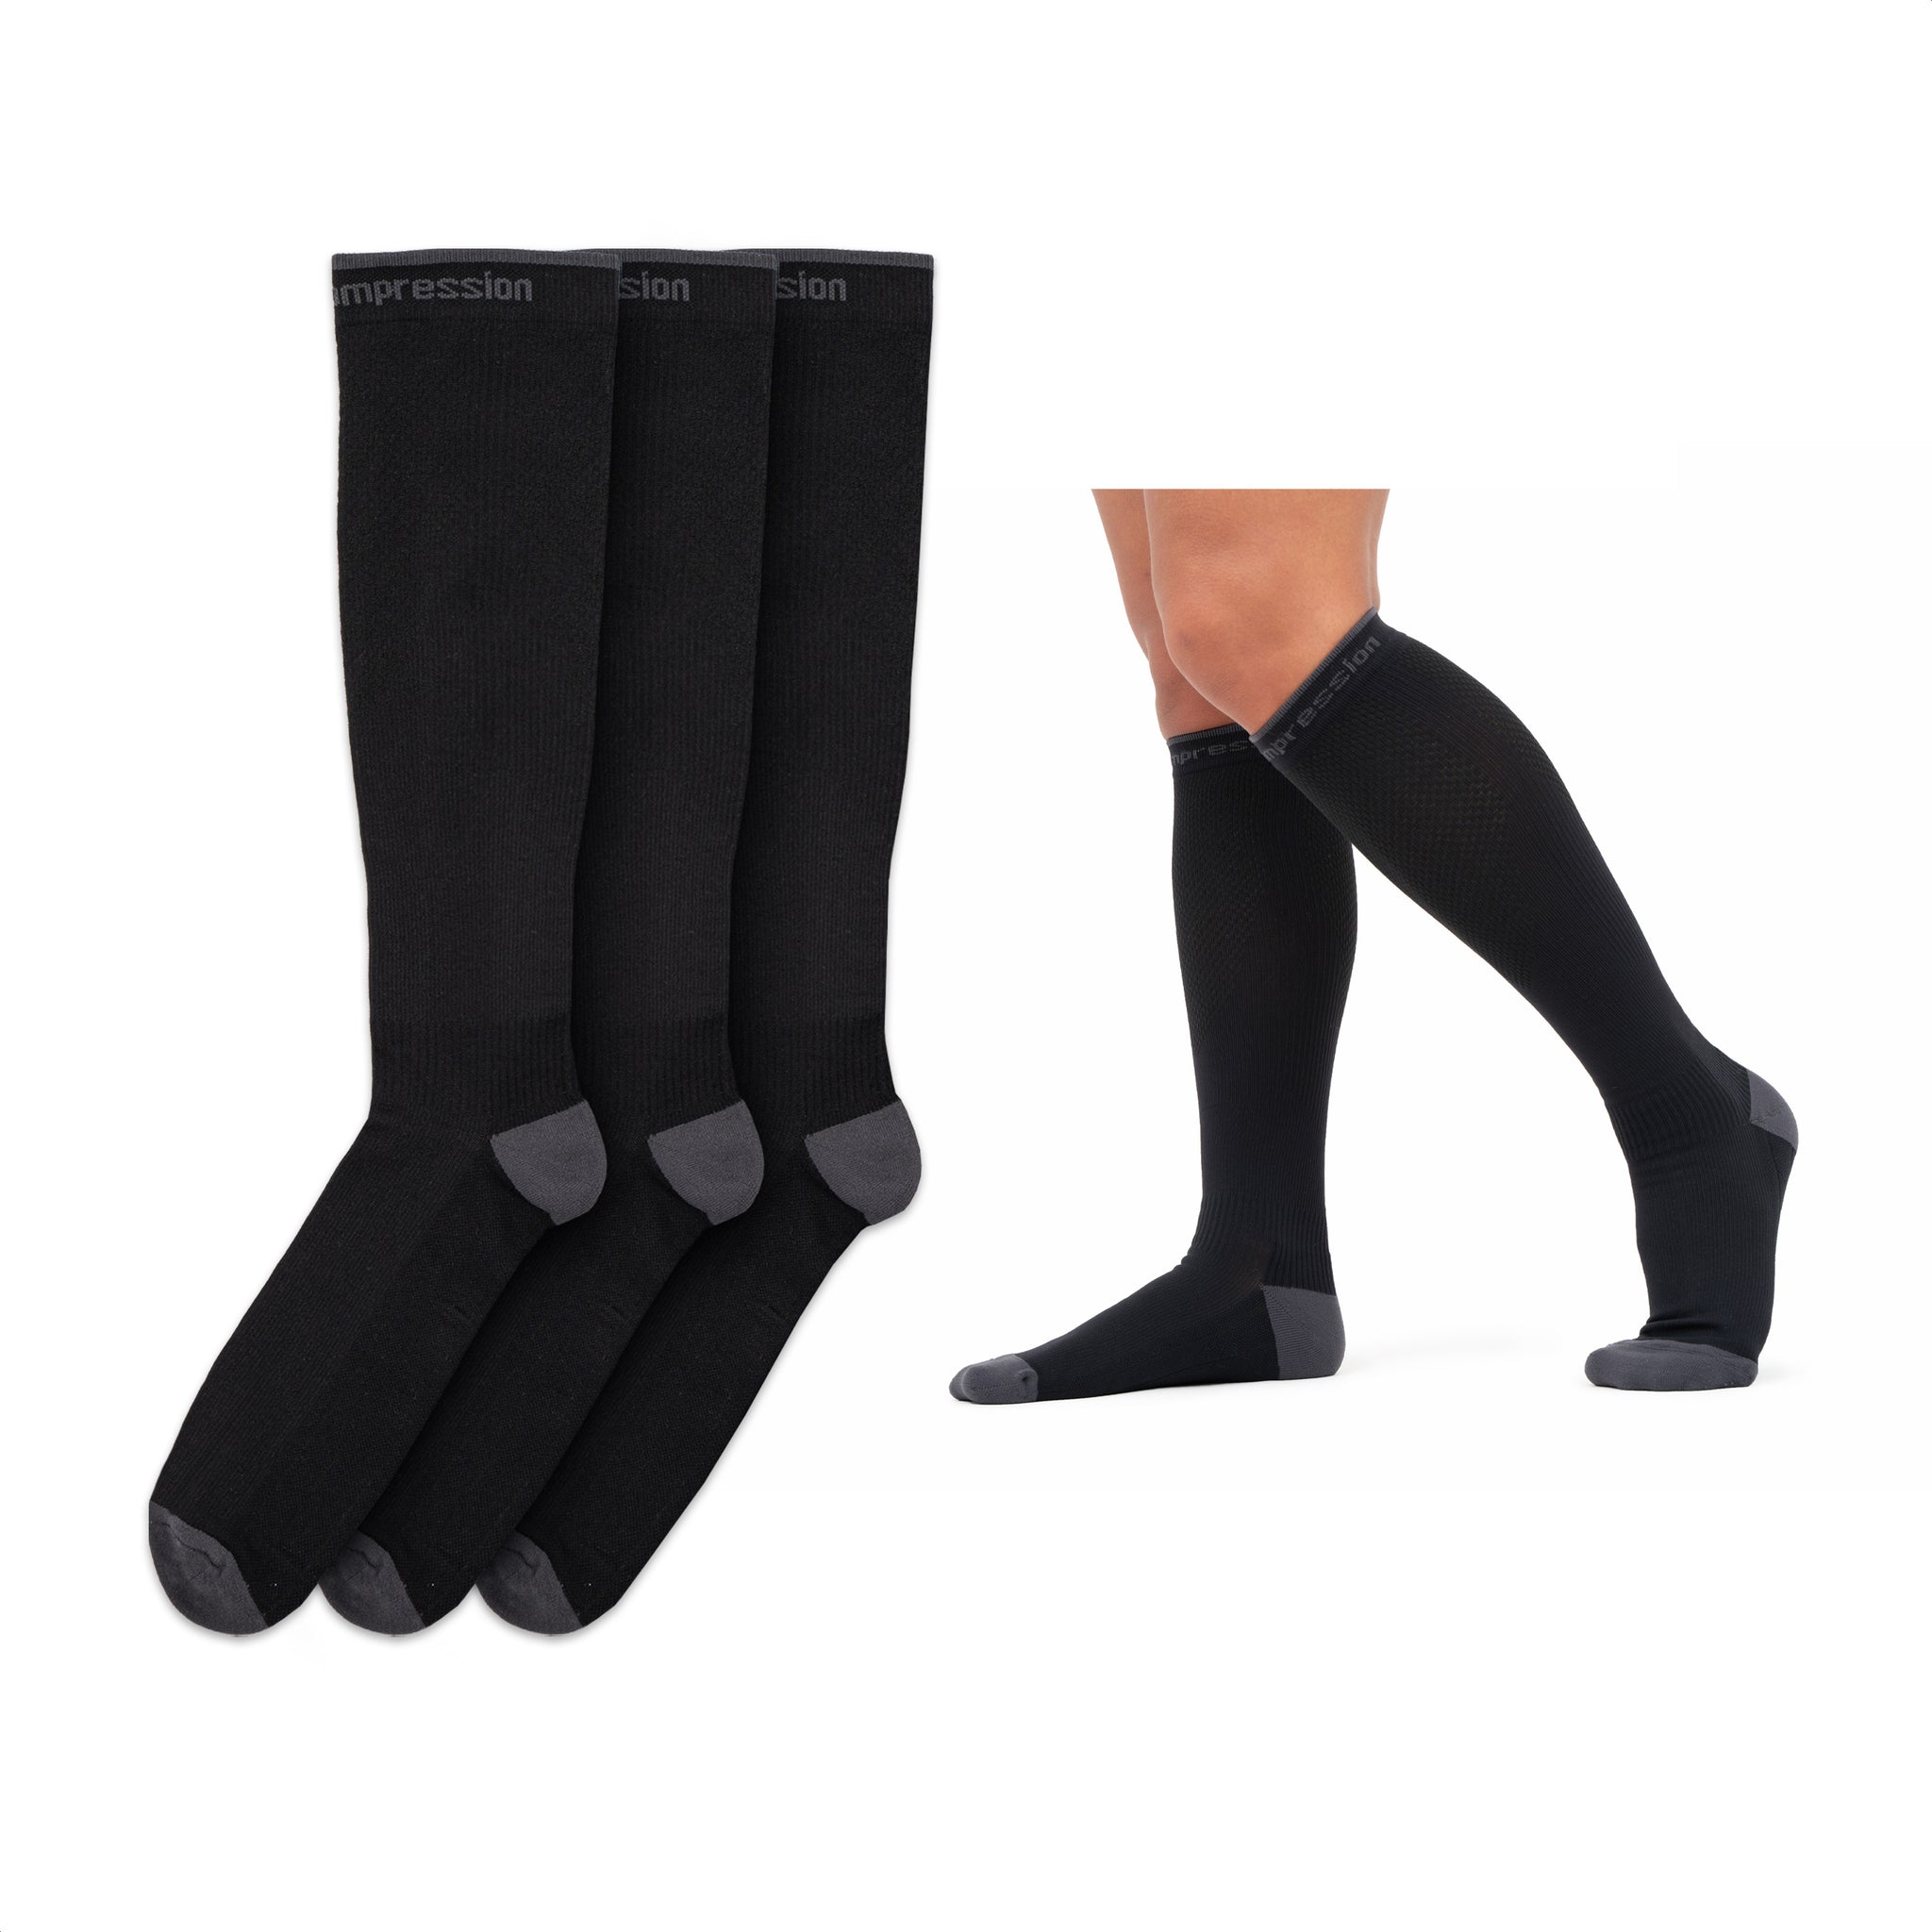 Copper Compression Powerknit Knee High Socks (3 pairs)